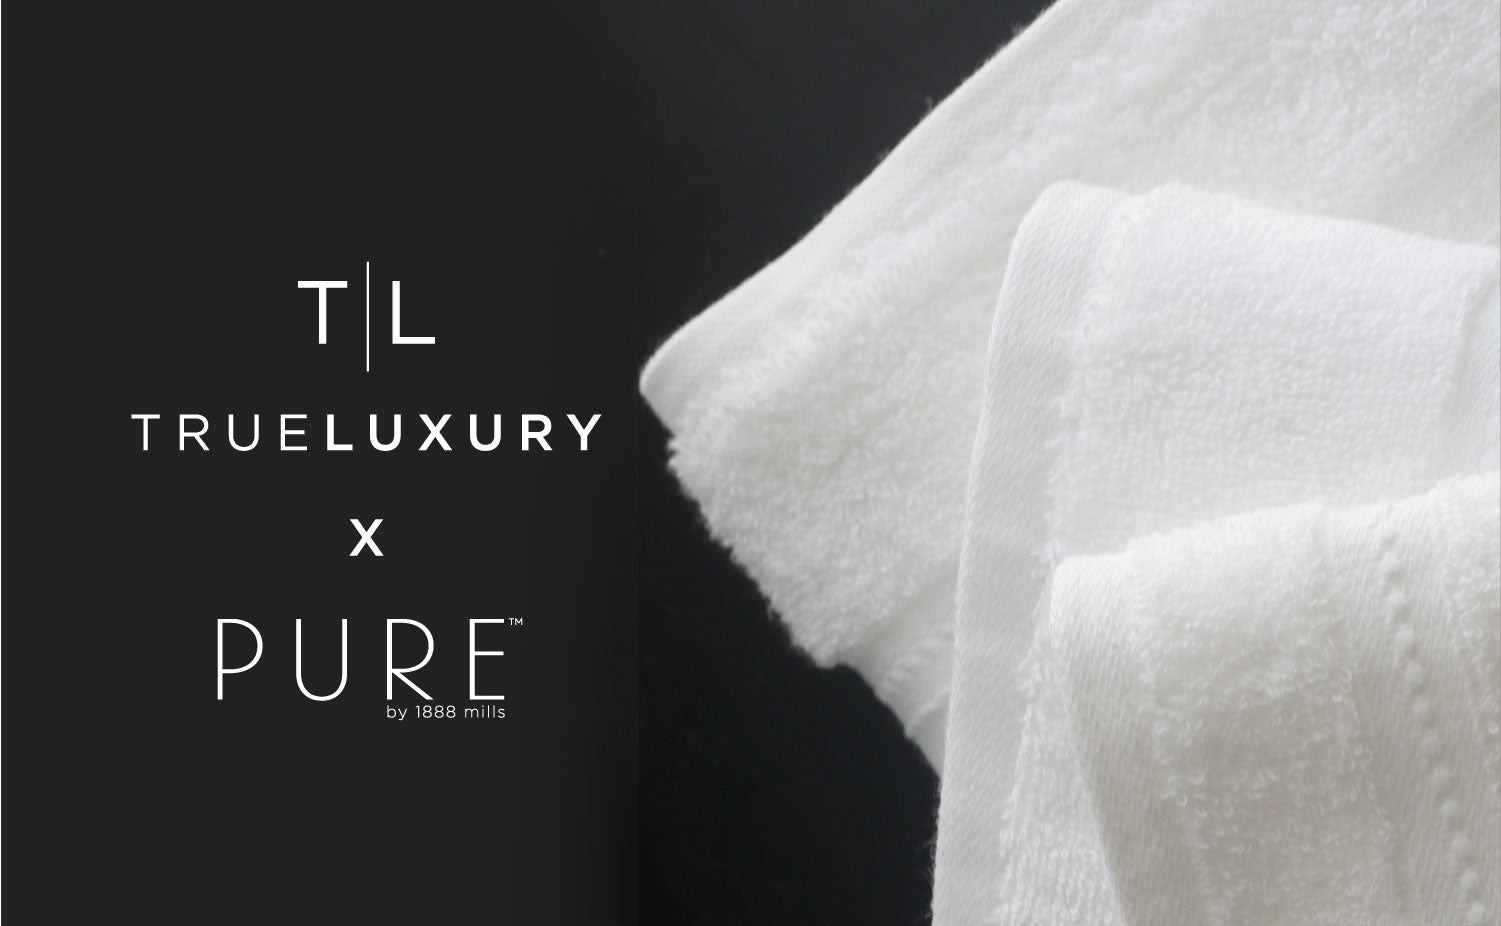 Generic SANLI Luxury Bath Towels Pure Cotton Thick Bath Towel